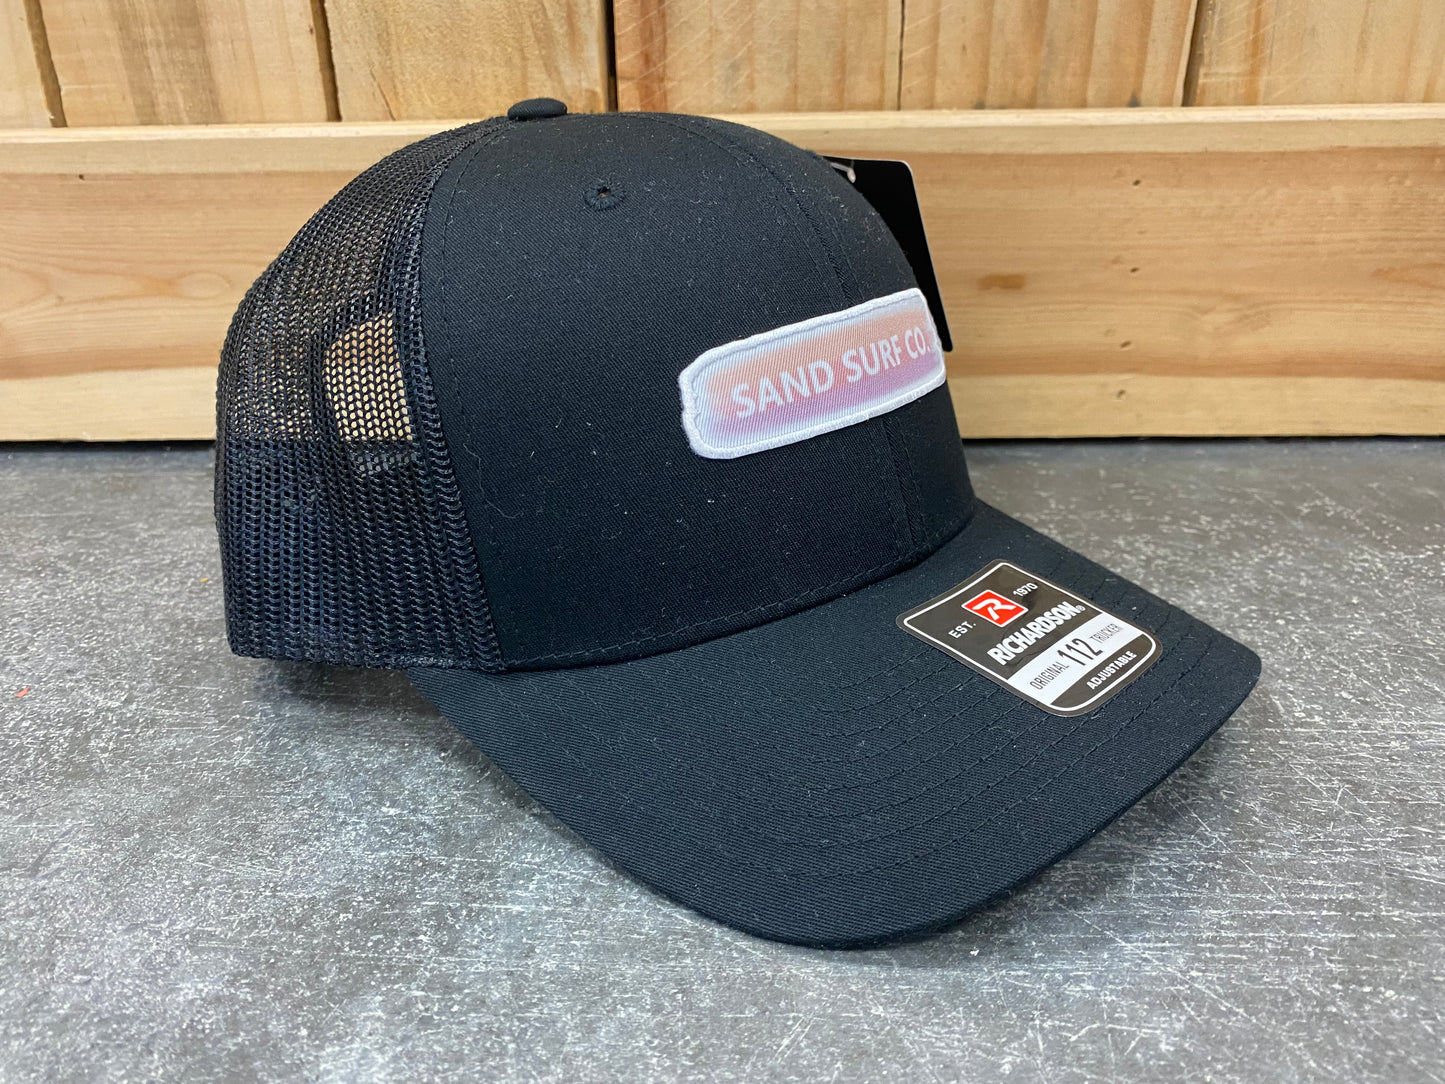 Sand Surf Co. Logo Trucker Hat